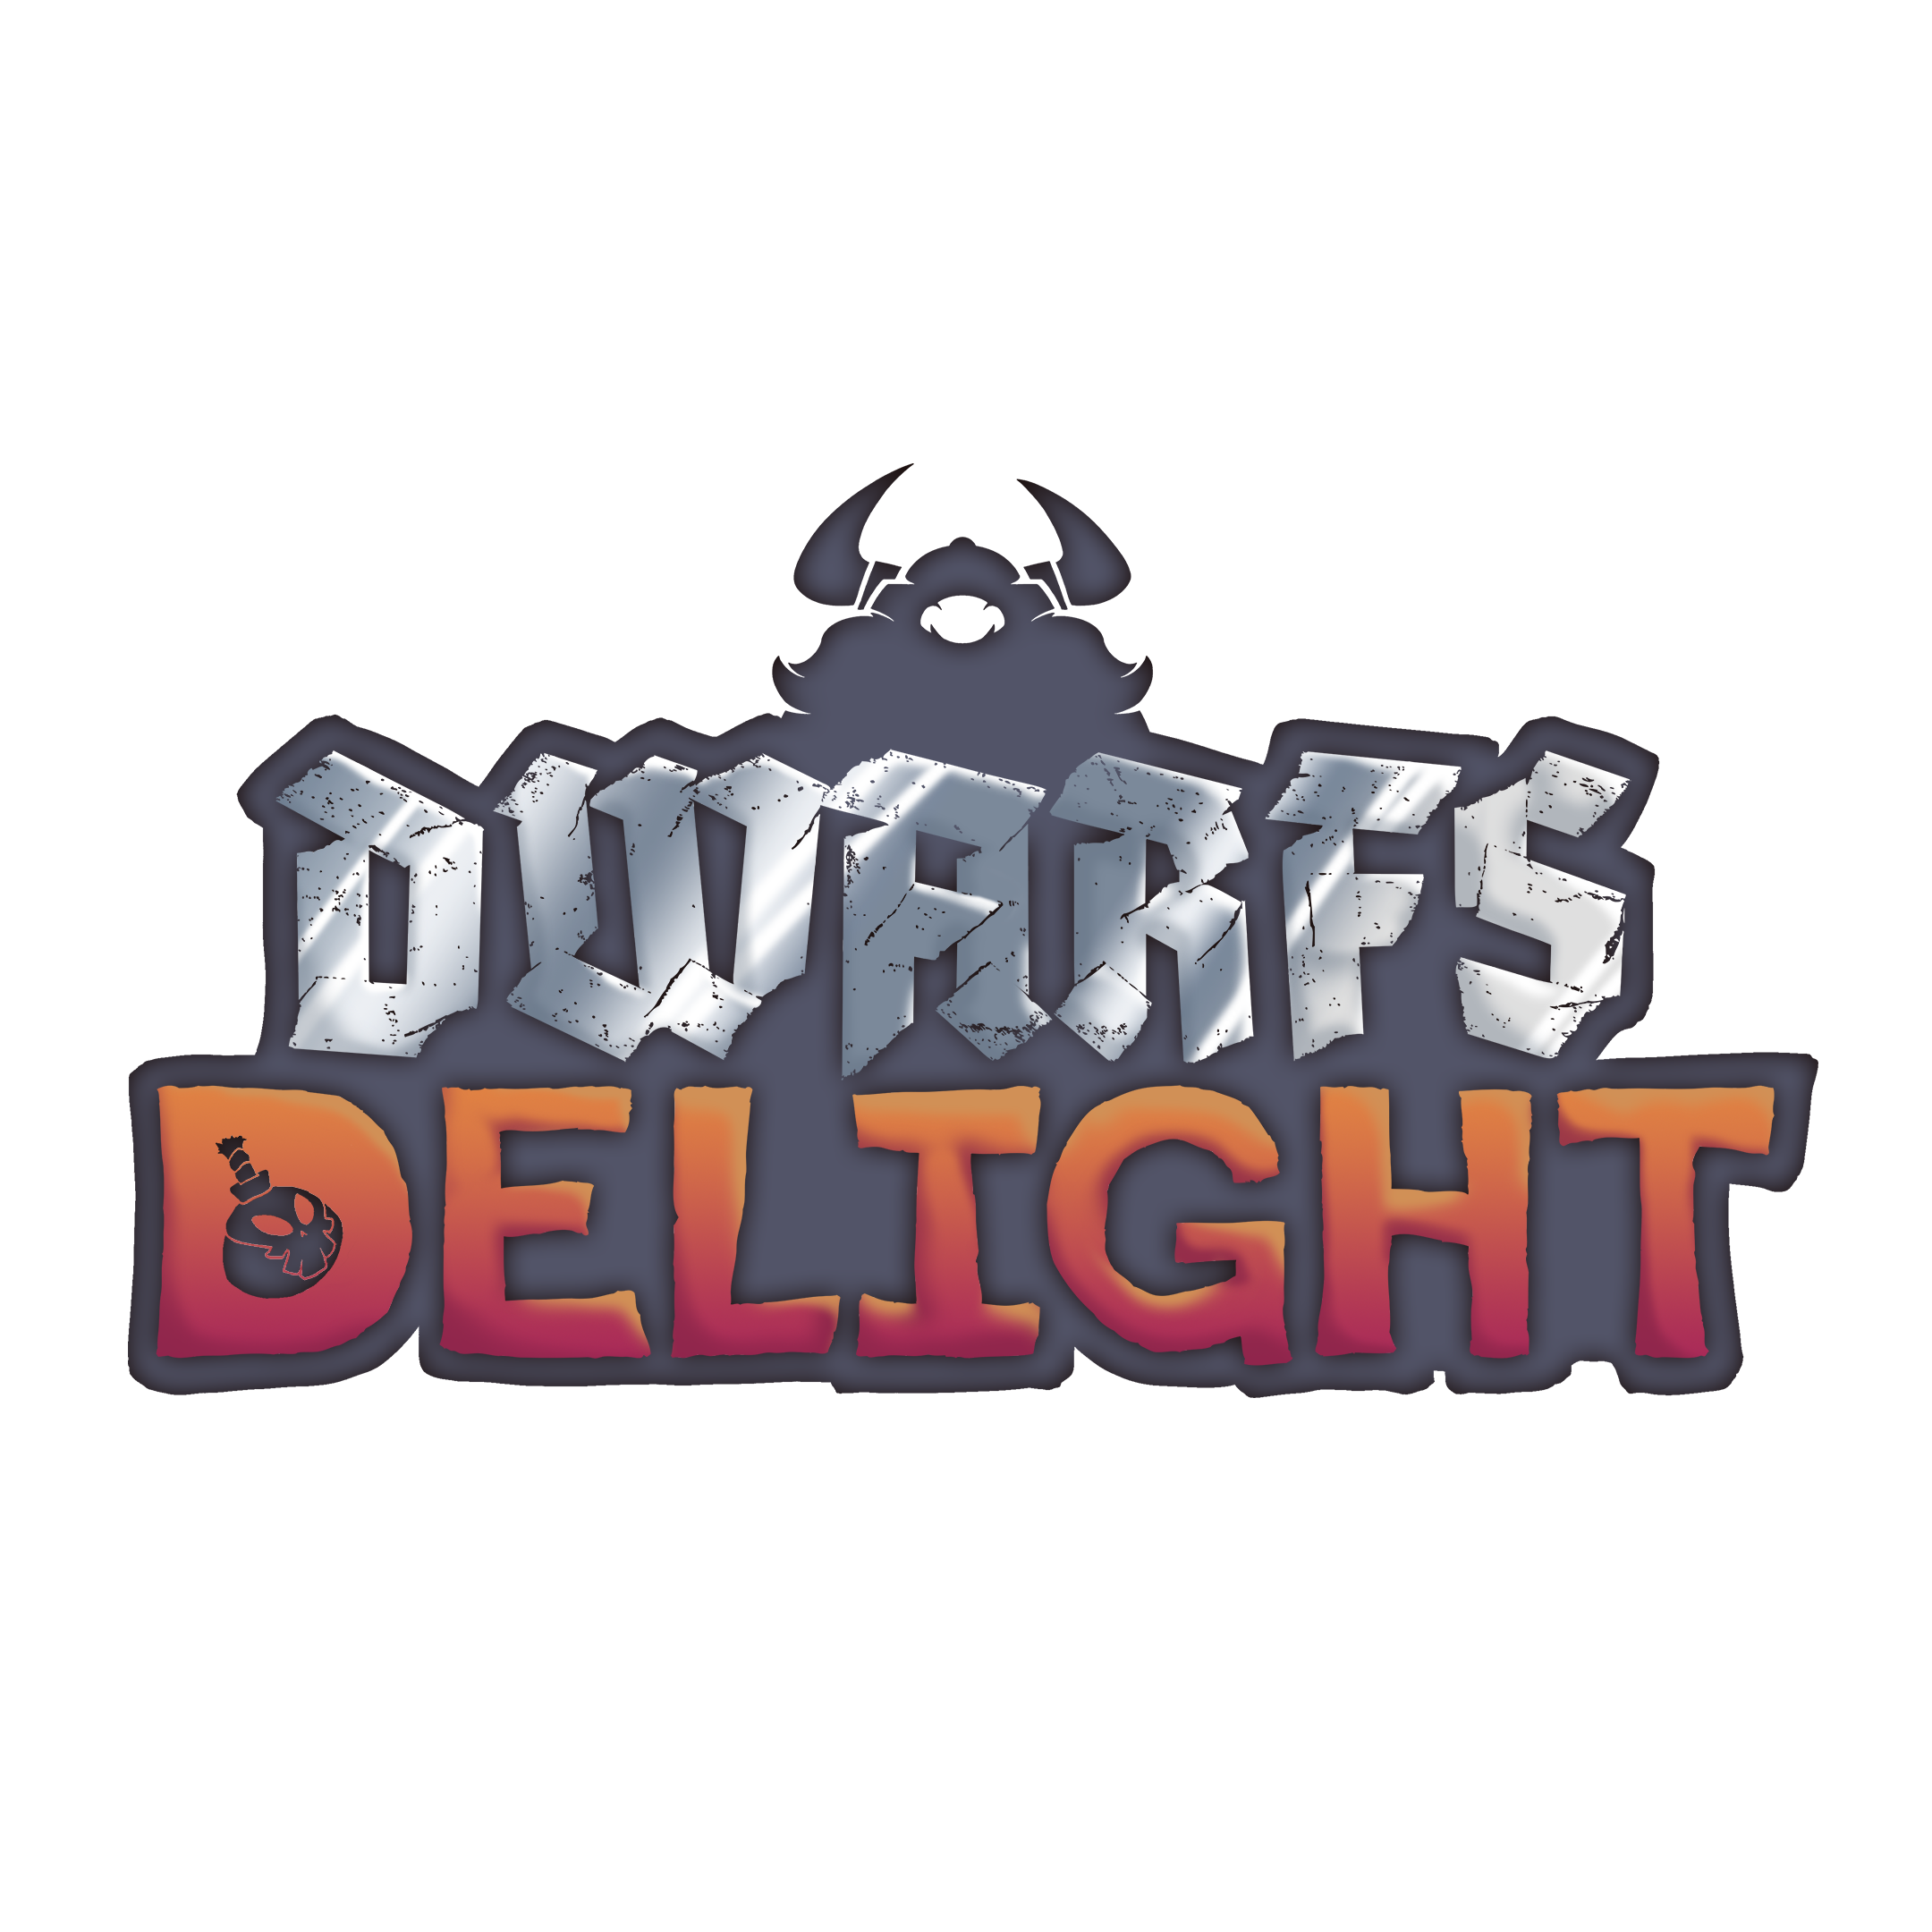 Dwarfs Delight